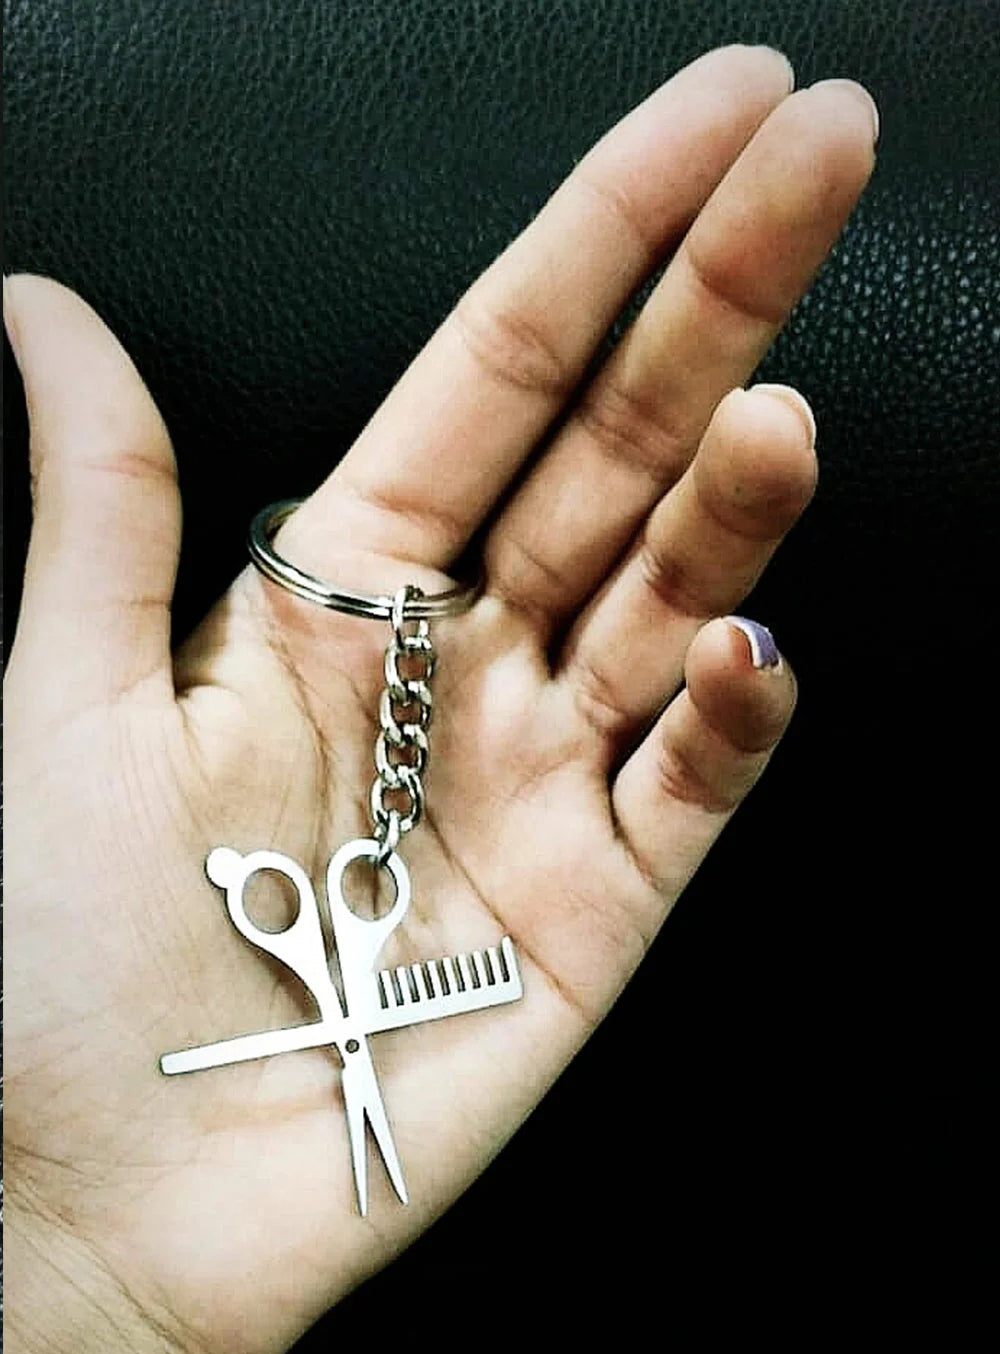 Comb and Scissors Keychain